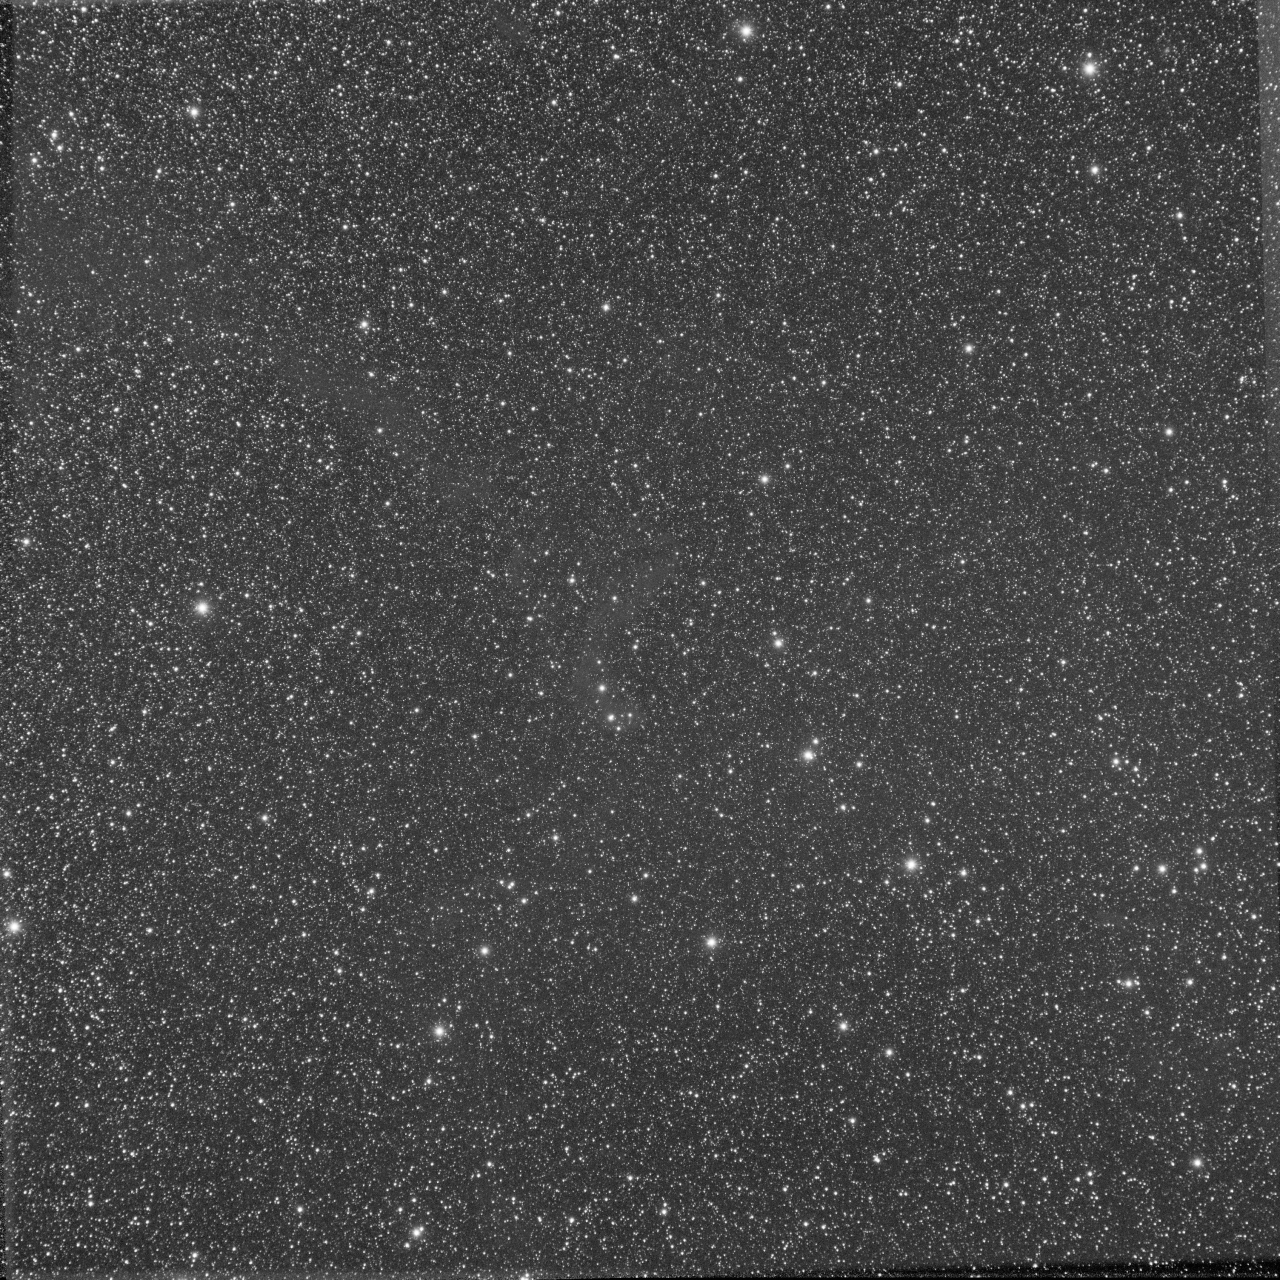 LBN 437 - Gecko Nebula Widefield - G